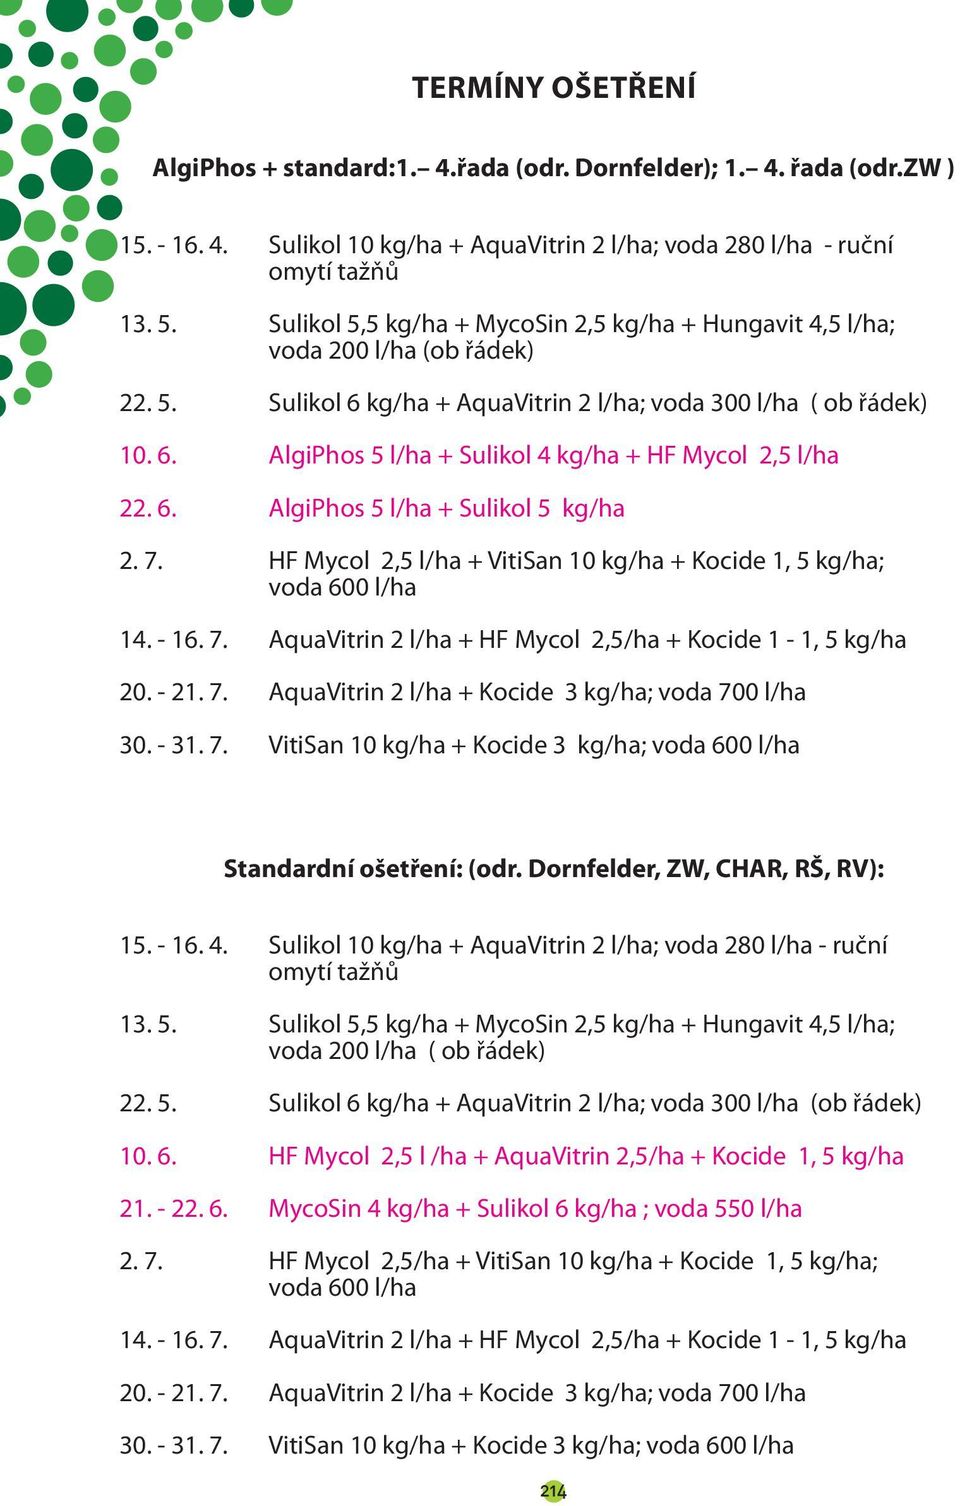 6. AlgiPhos 5 l/ha + Sulikol 5 kg/ha 2. 7. HF Mycol 2,5 l/ha + VitiSan 10 kg/ha + Kocide 1, 5 kg/ha; voda 600 l/ha 14. - 16. 7. AquaVitrin 2 l/ha + HF Mycol 2,5/ha + Kocide 1-1, 5 kg/ha 20. - 21. 7. AquaVitrin 2 l/ha + Kocide 3 kg/ha; voda 700 l/ha 30.